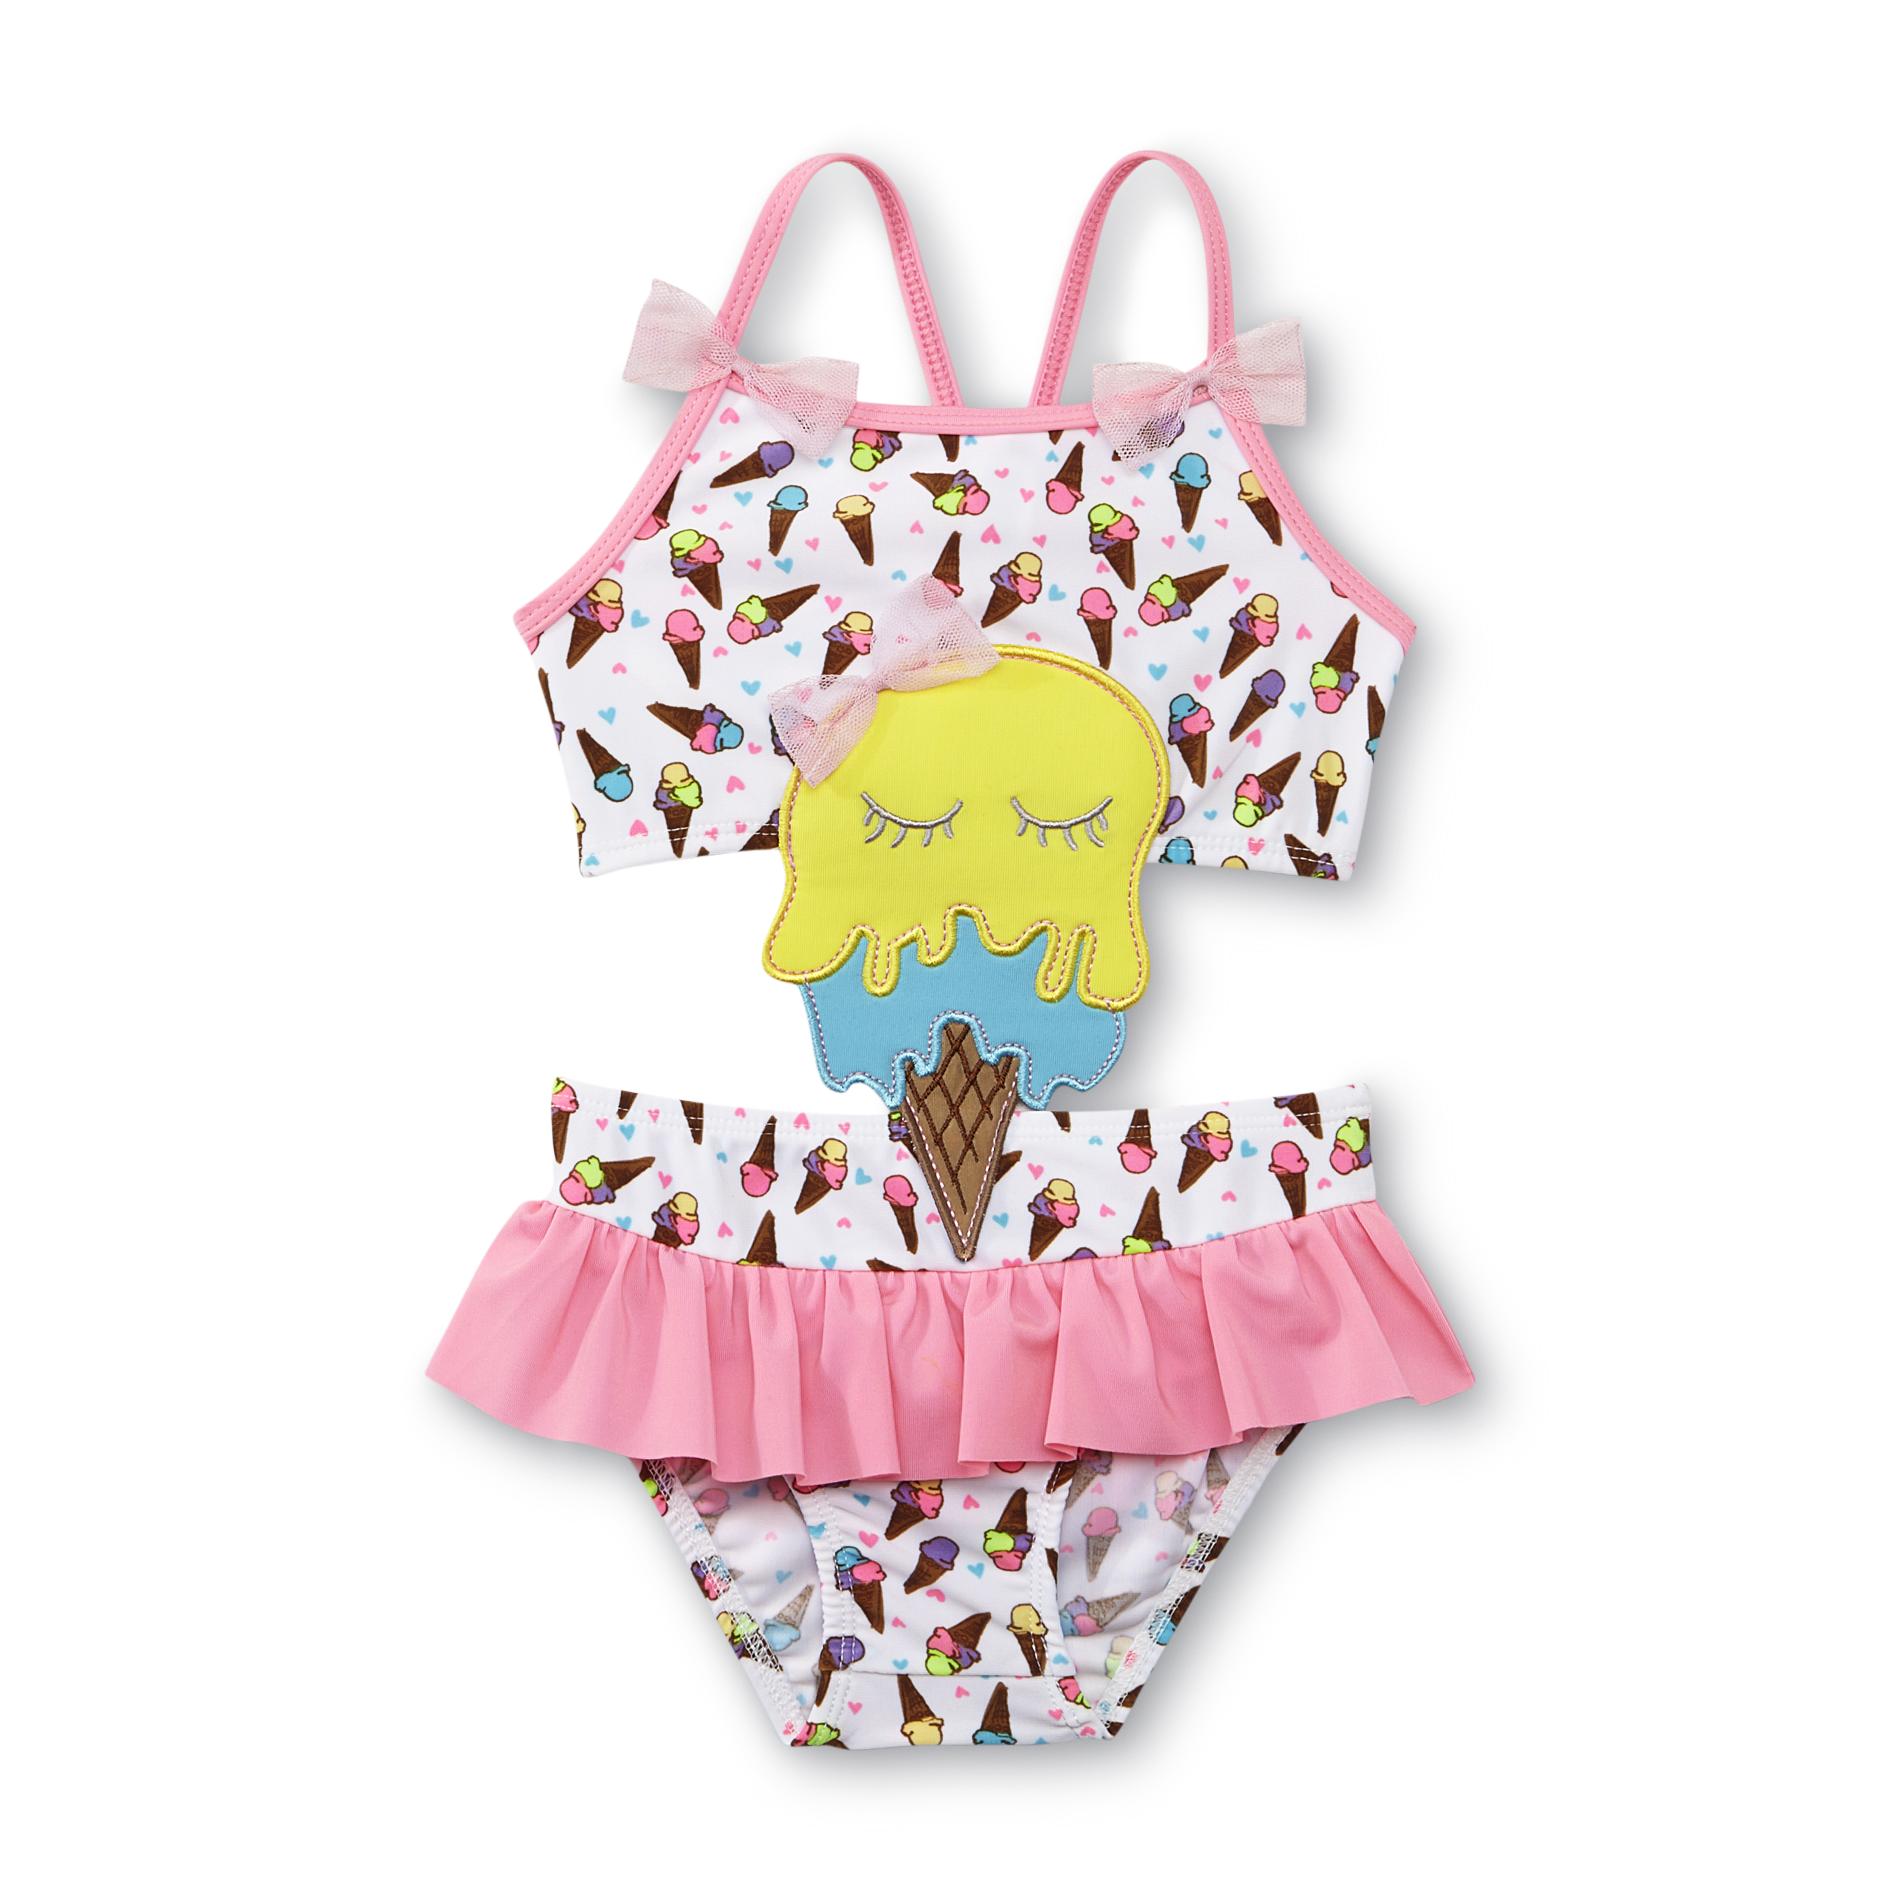 Joe Boxer Infant & Toddler Girl's Cutout Swimsuit - Ice Cream